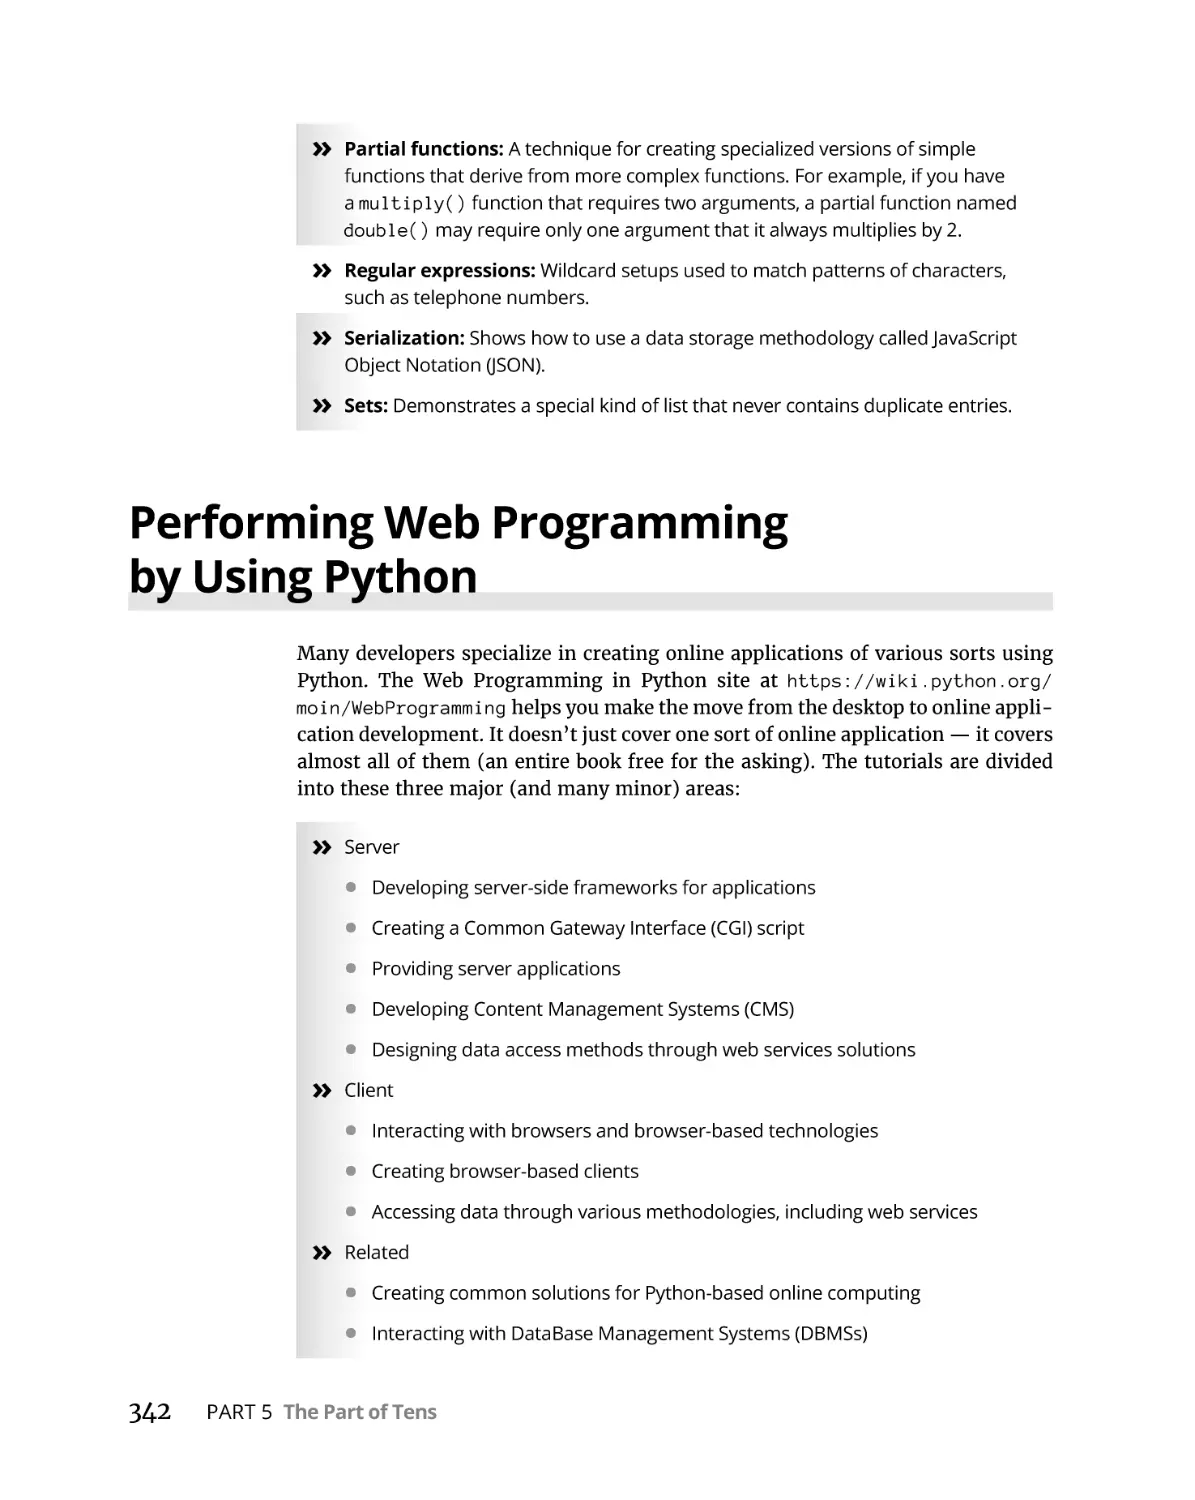 Performing Web Programming by Using Python